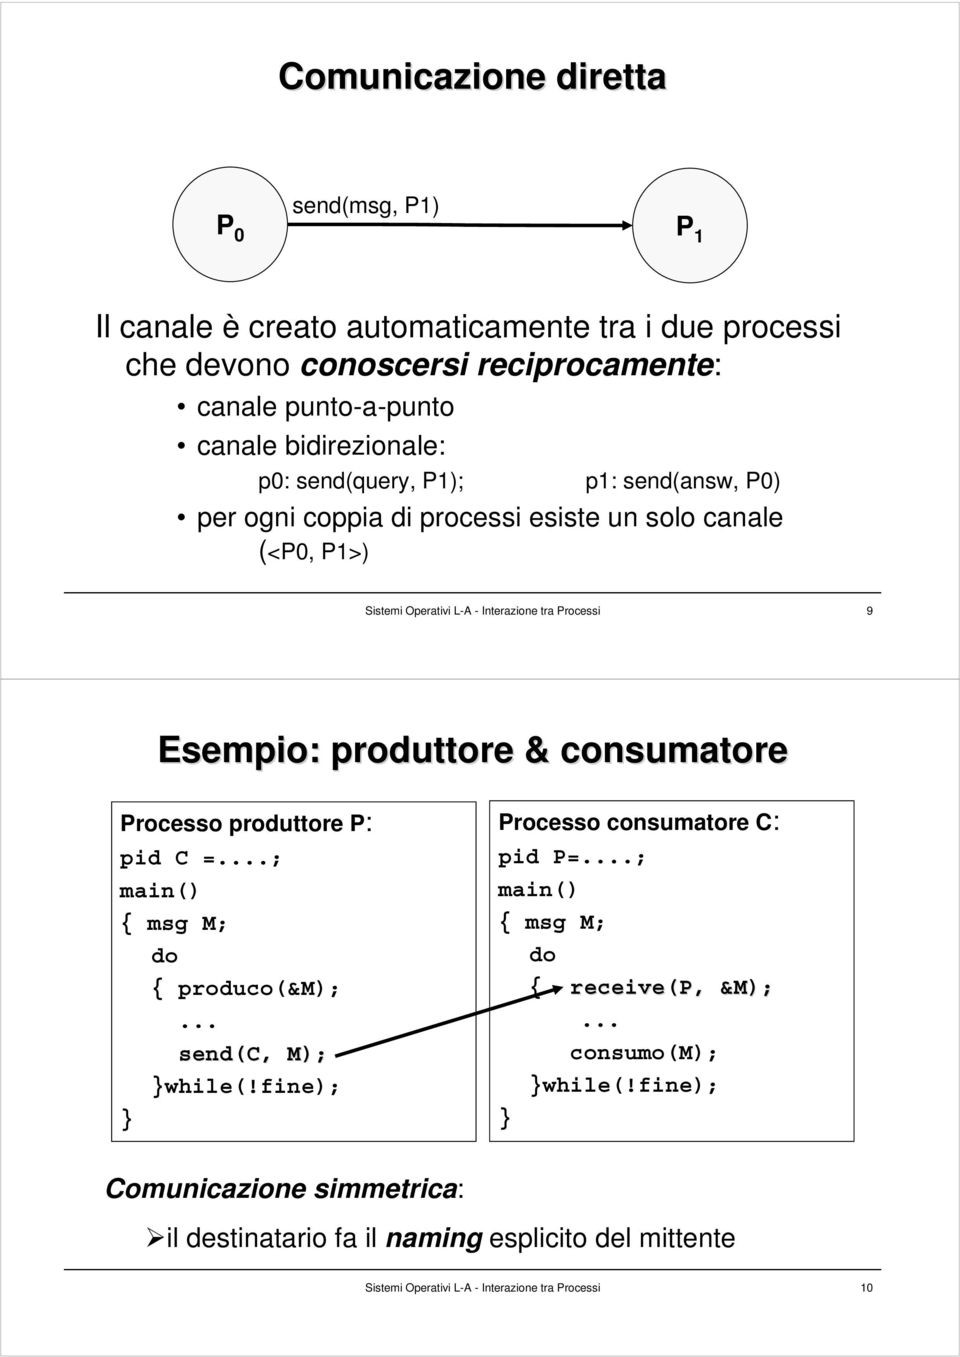 Esempio: produttore & consumatore Processo produttore P: pid C =...; main() { msg M; do { produco(&m);... send(c, M); while(!fine); Processo consumatore C: pid P=.